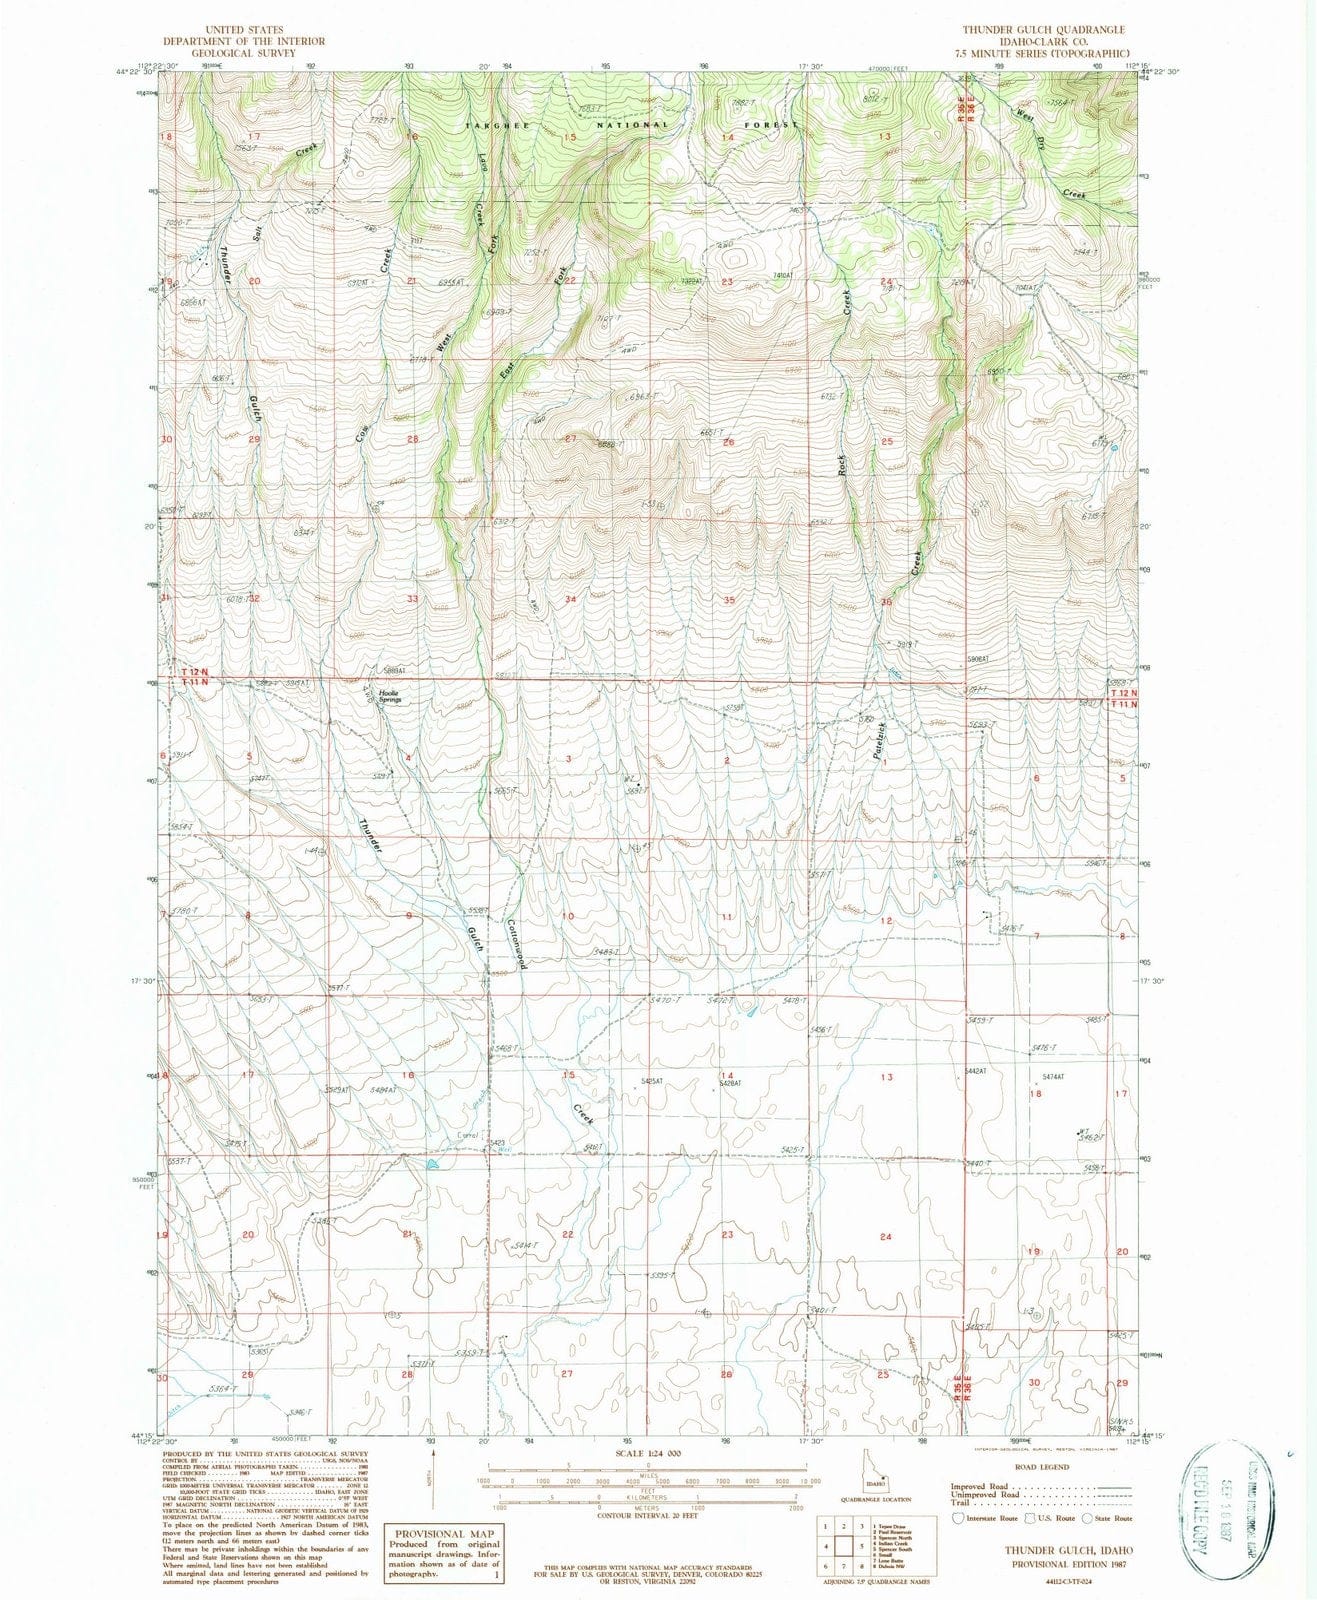 1987 Thunder Gulch, ID - Idaho - USGS Topographic Map